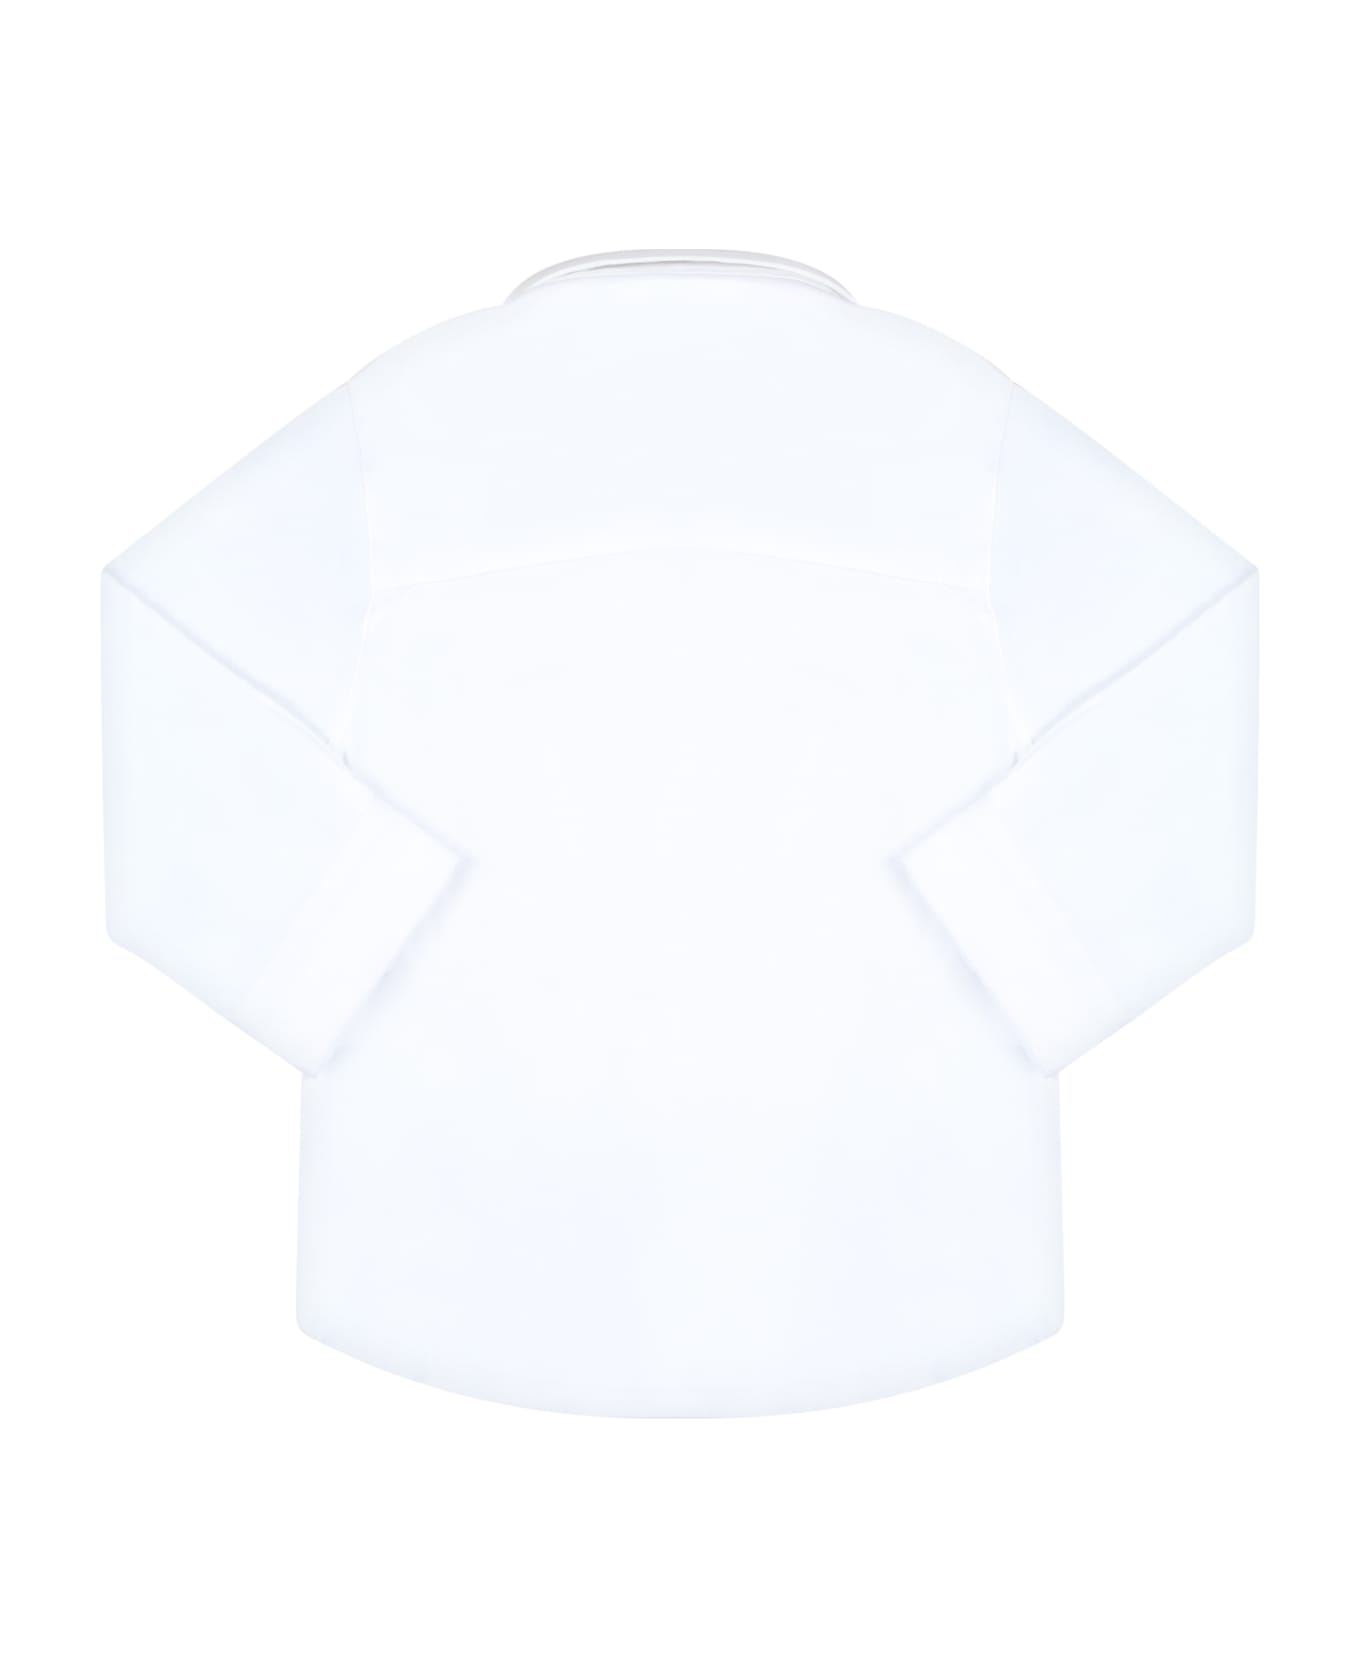 Hugo Boss White Shirt For Baby Boy With White Logo - White